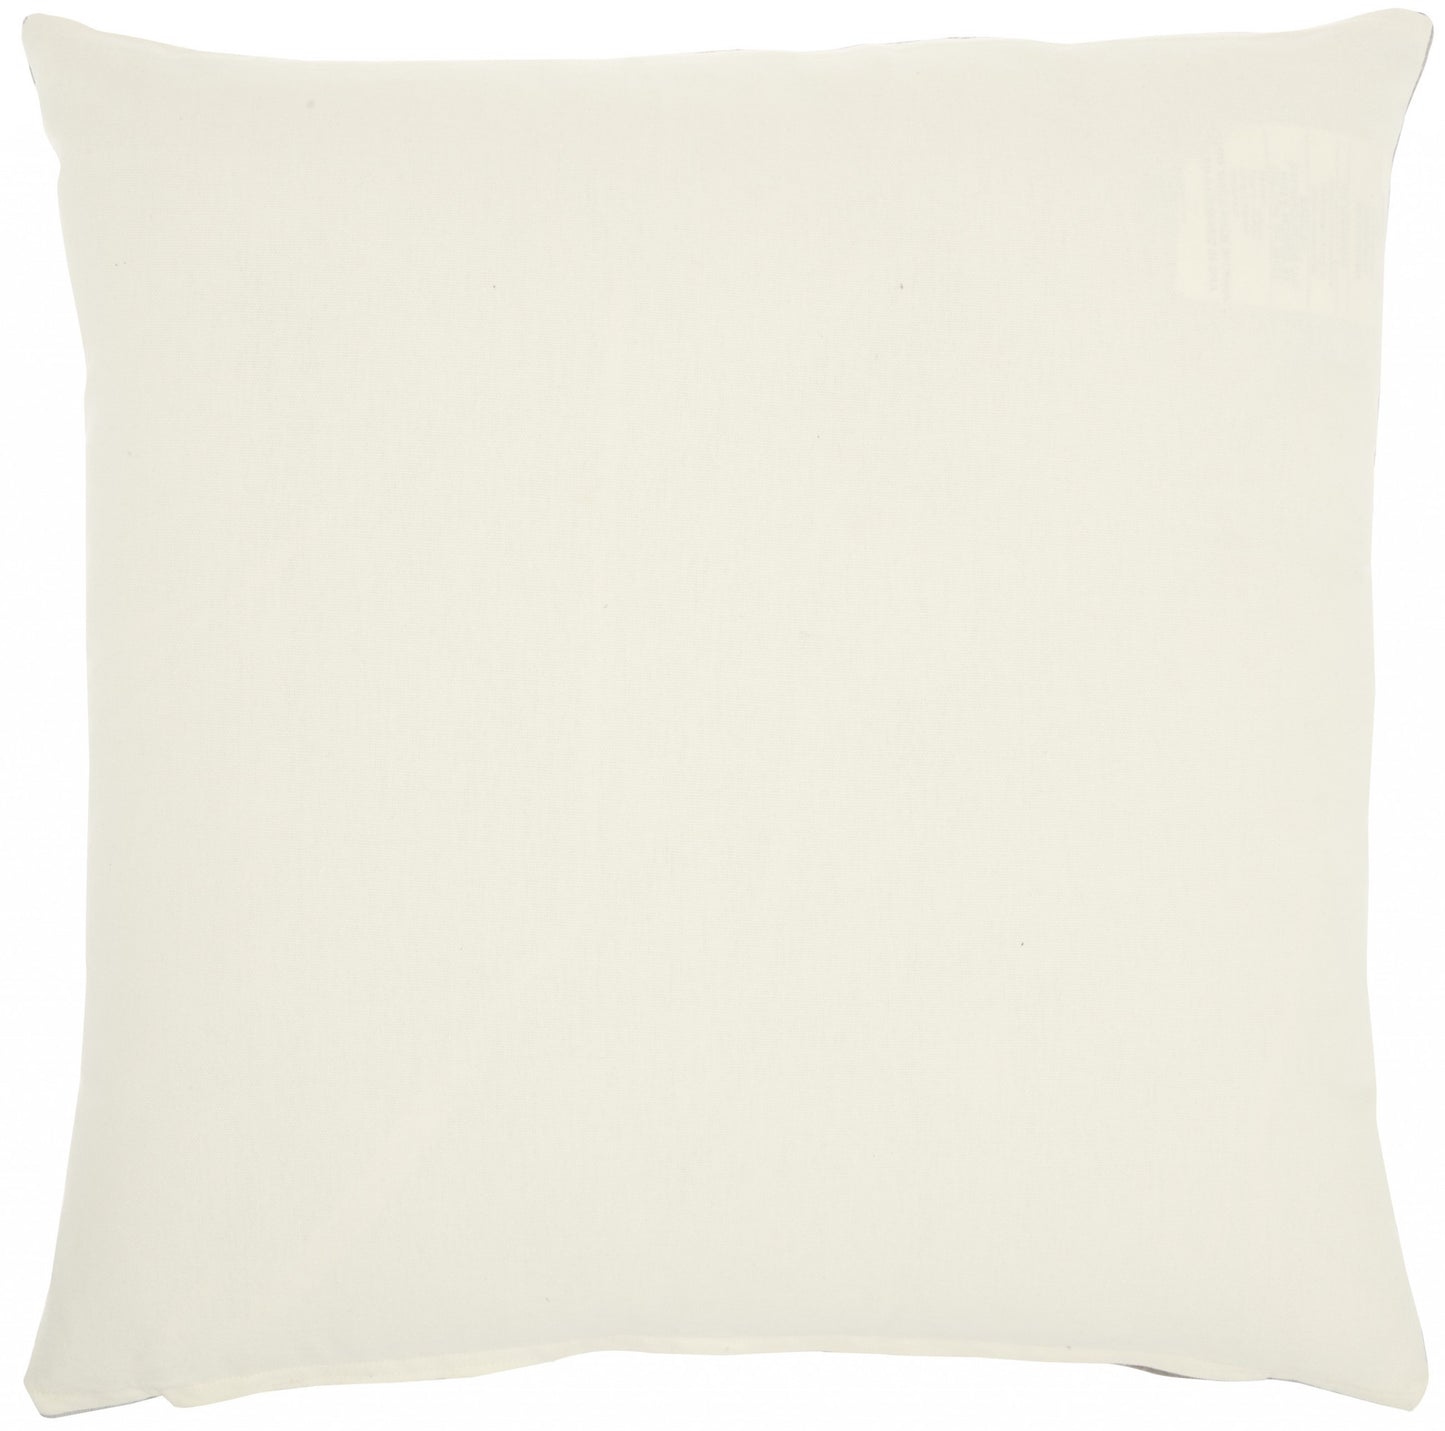 Gray Soft Velvet Accent Throw Pillow